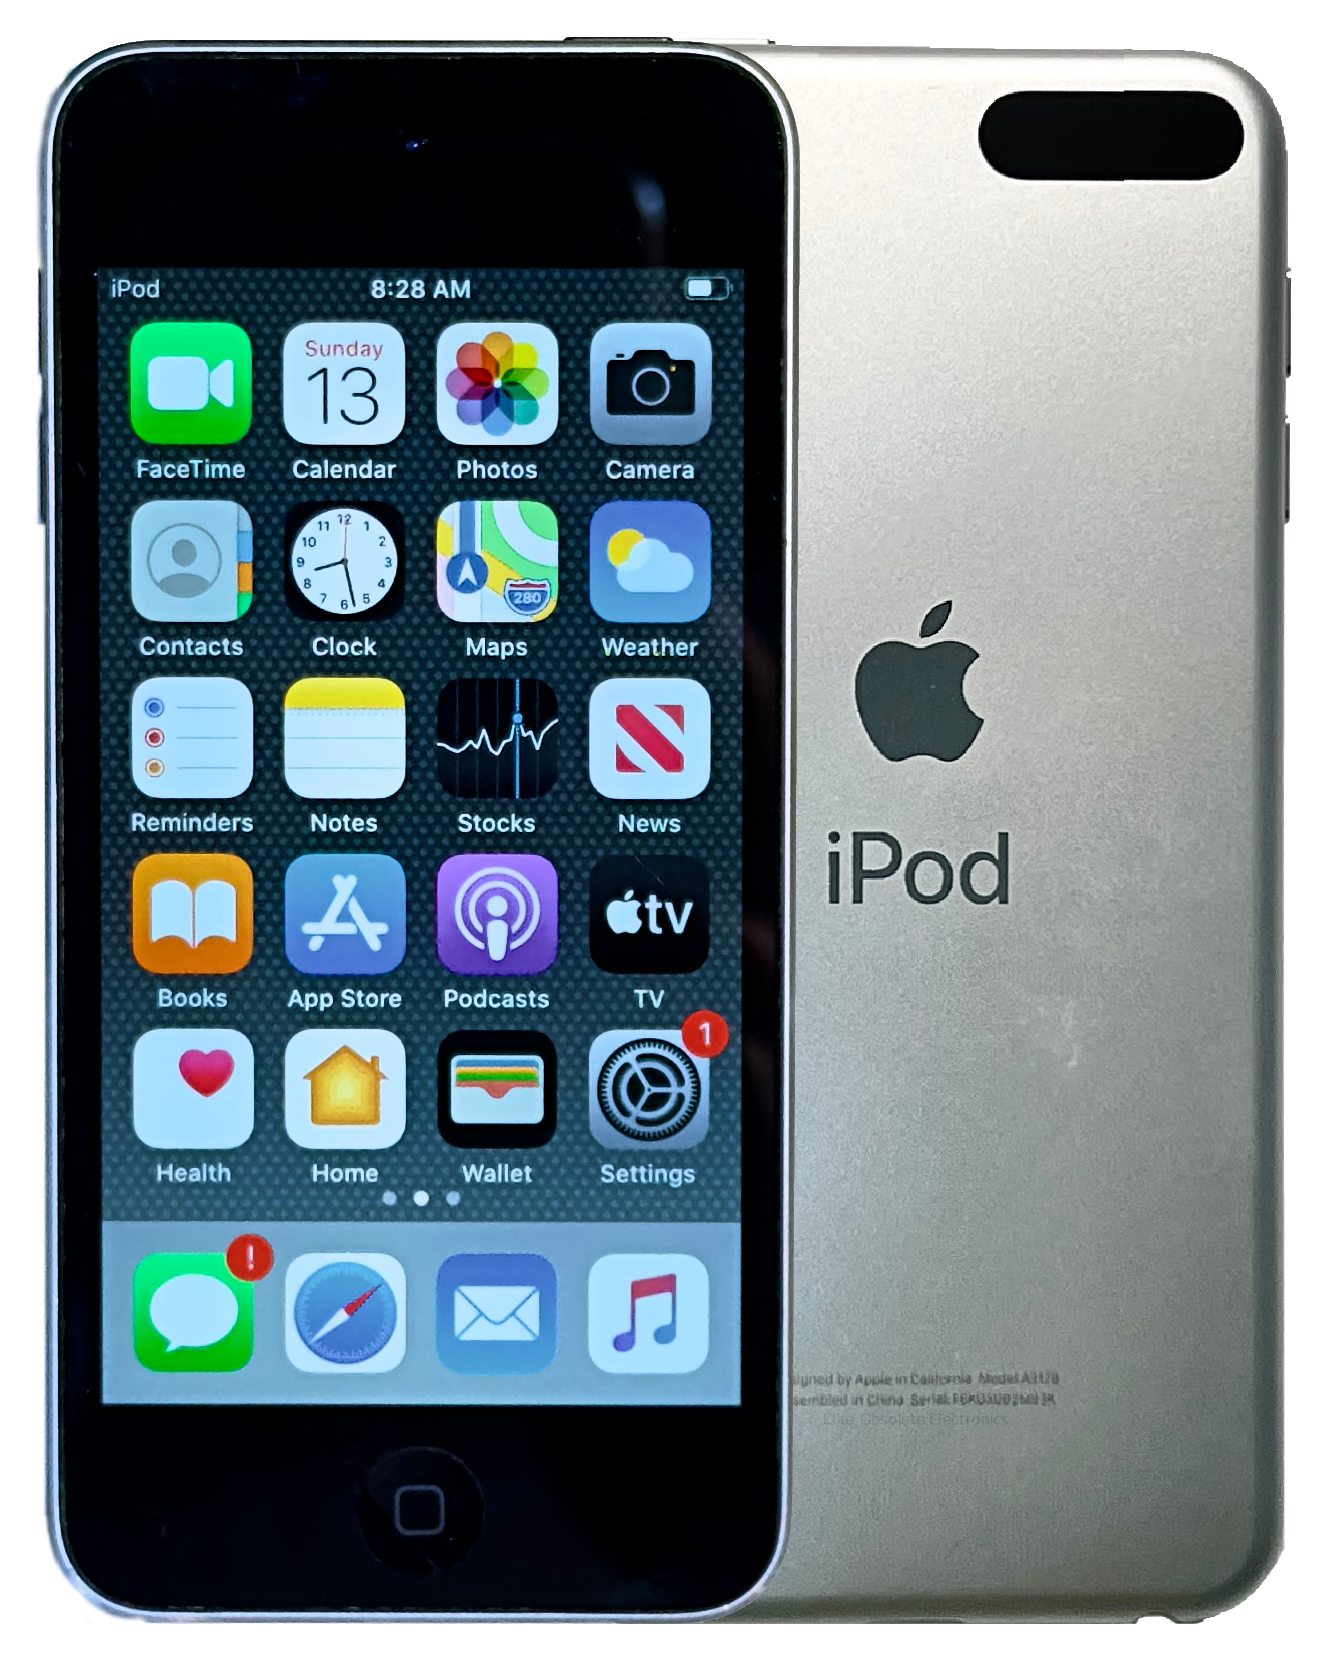 Rare iOS 13.4.1 Refurbished Apple iPod Touch 7th Generation Silver & Black 32GB MVHV2LL/A